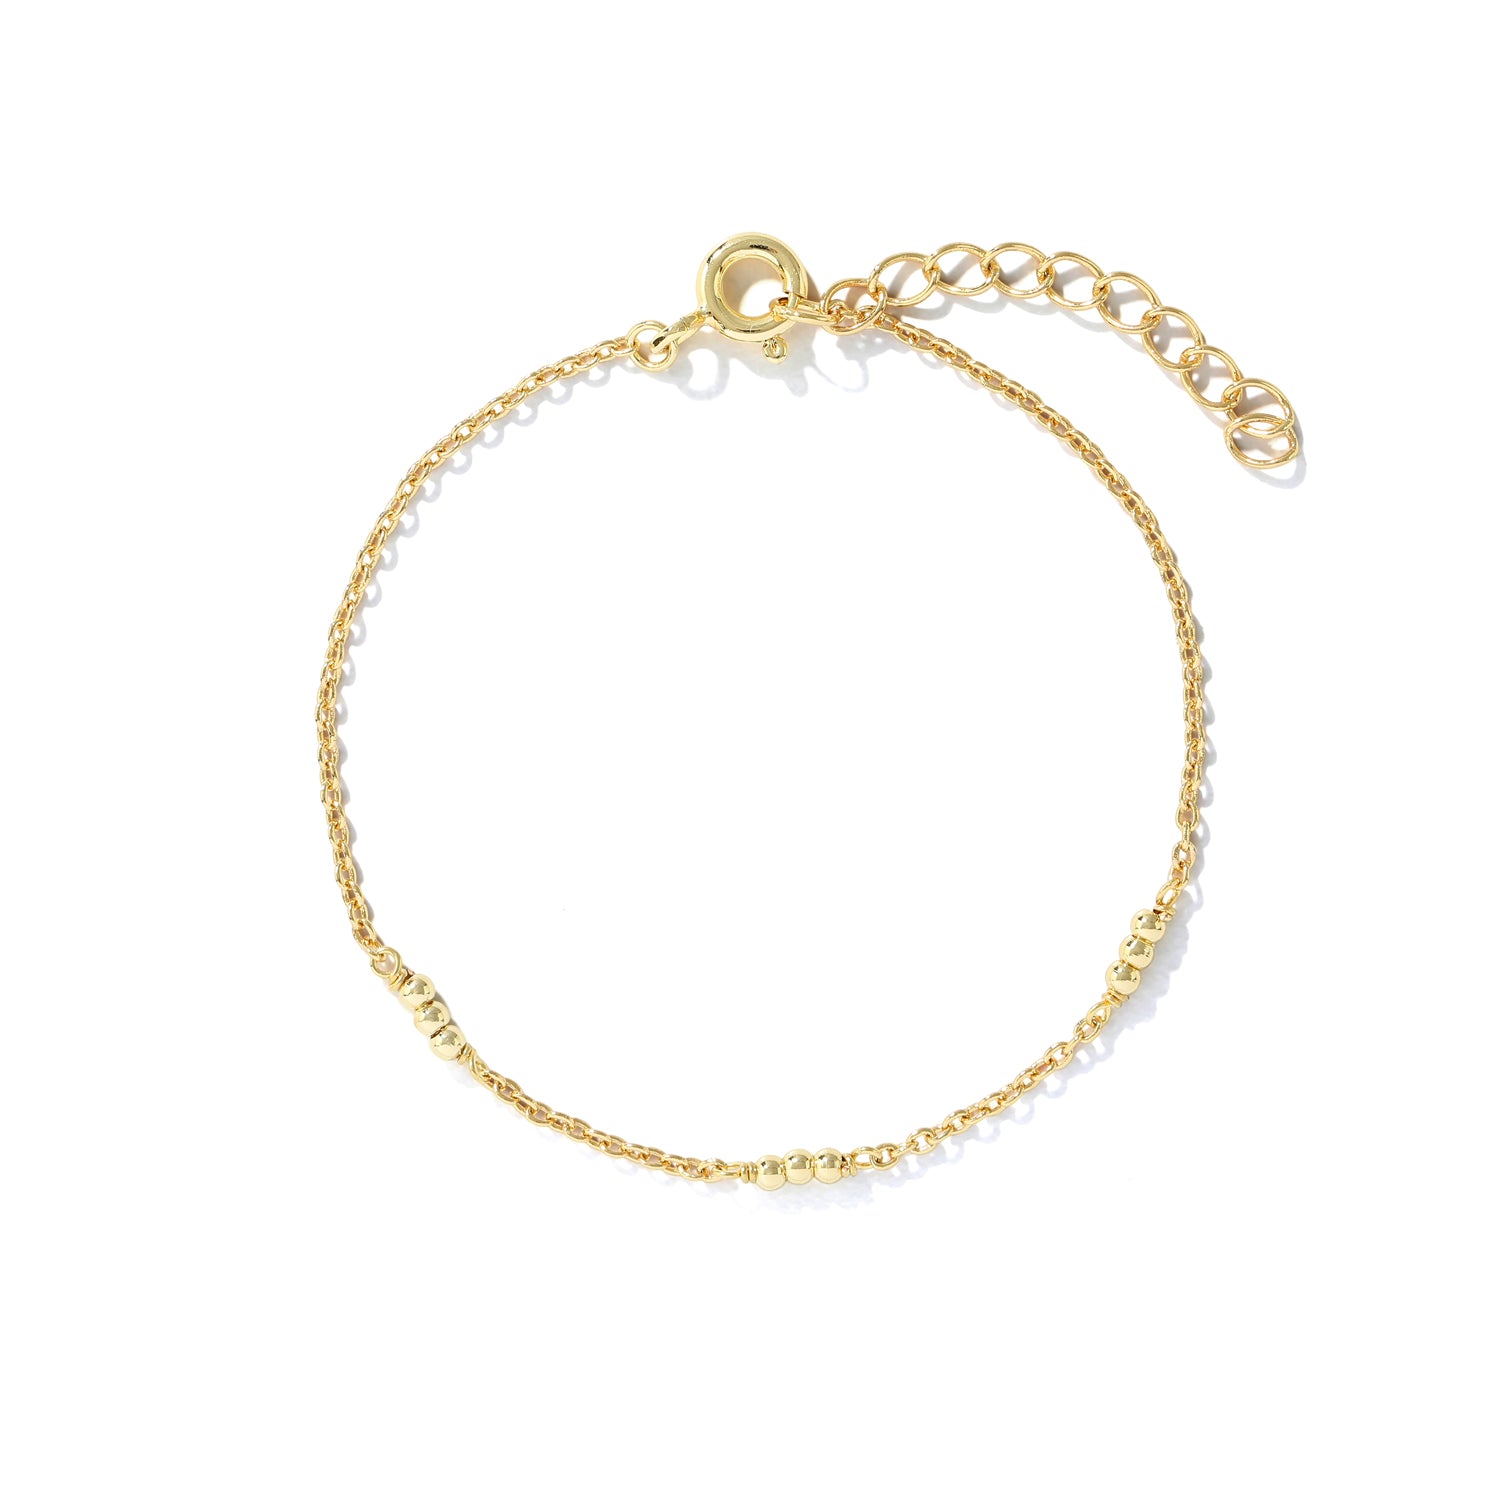 Minimalist and dainty chain bracelet. Gold chain bracelet.